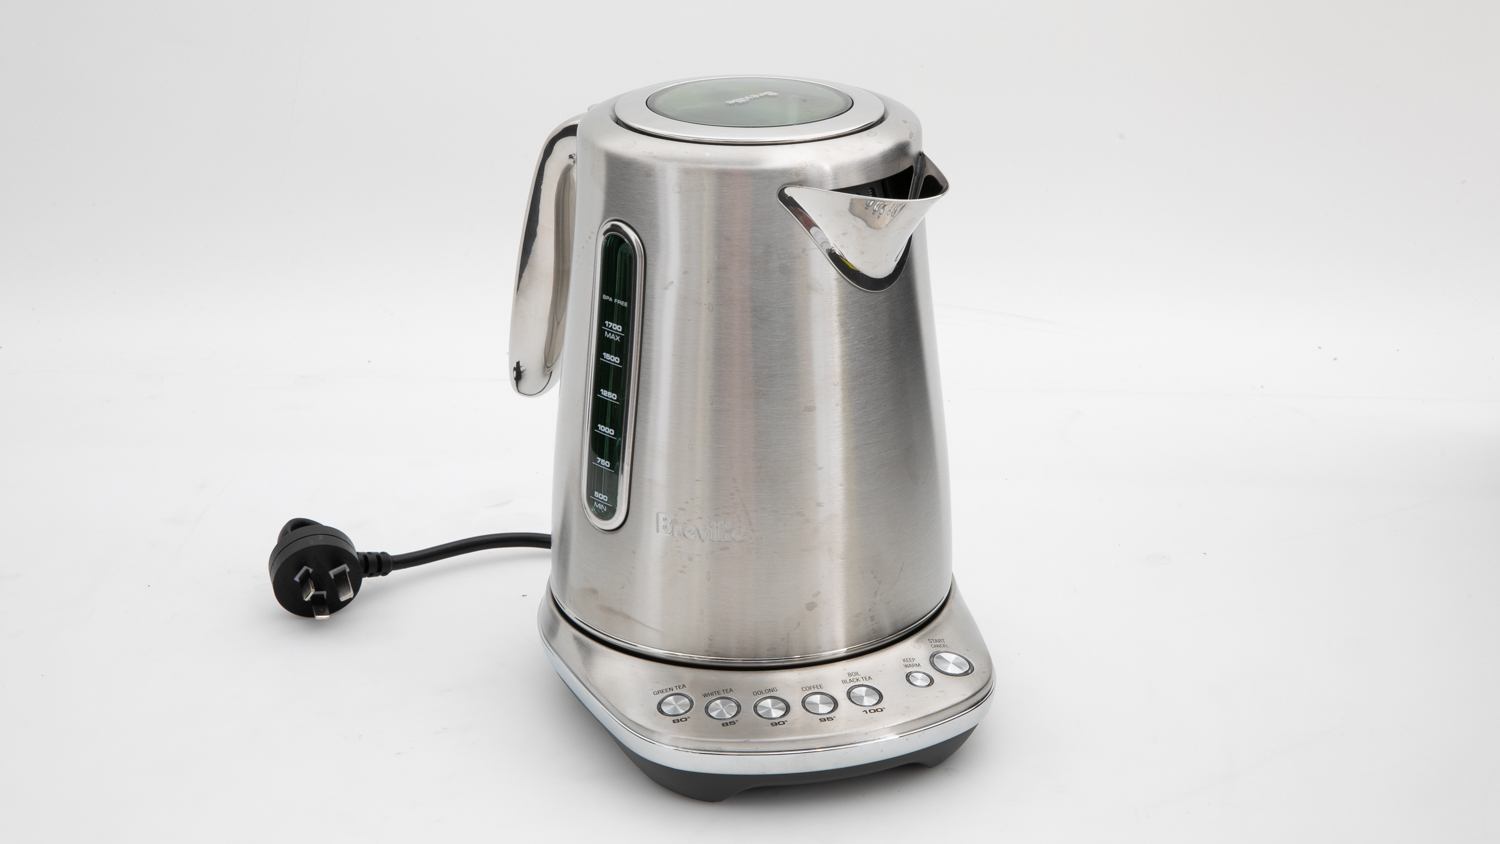 https://pdbimg.choice.com.au/breville-the-smart-kettle-luxe-bke845_1.jpg